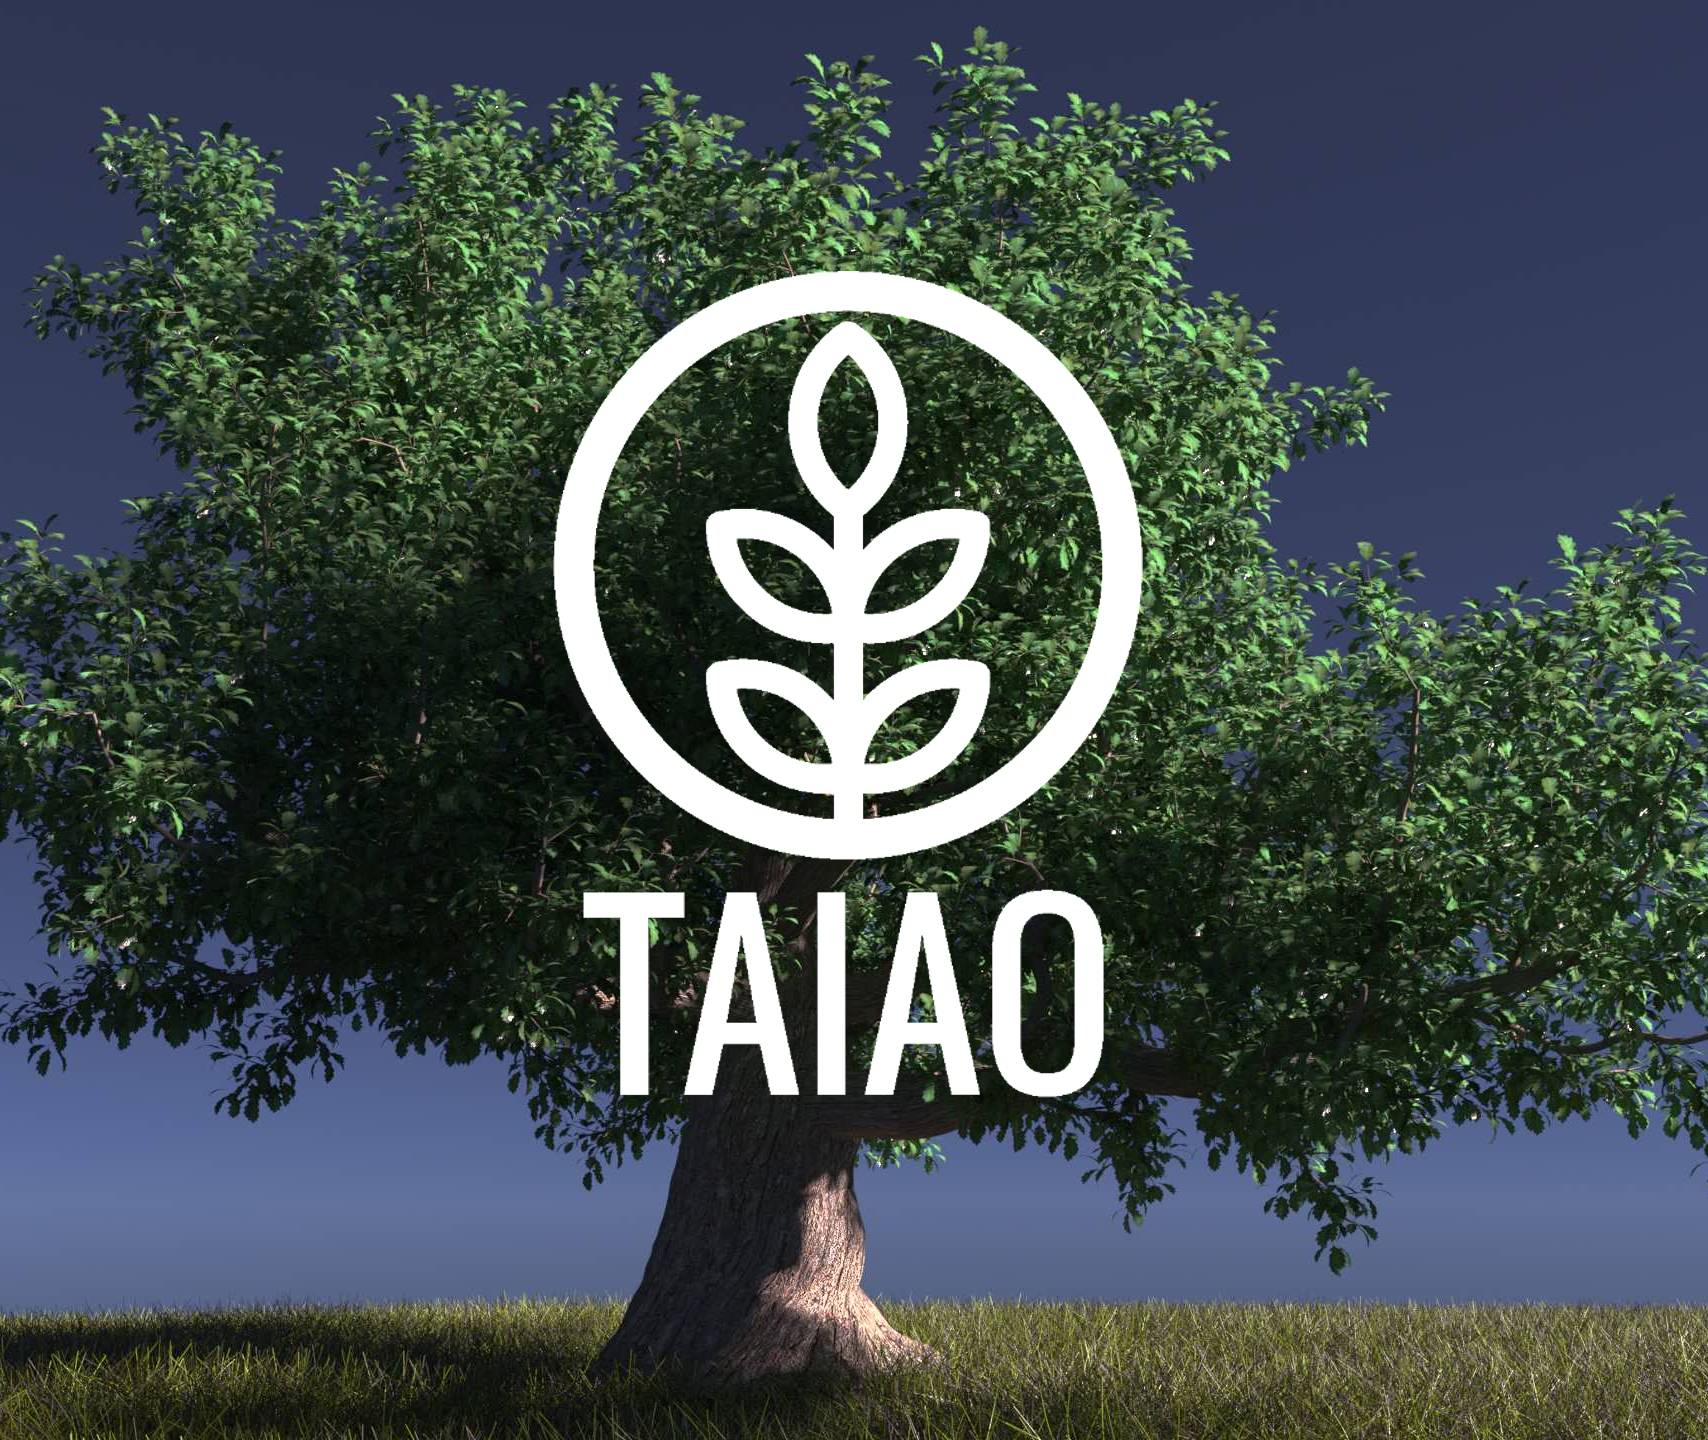 Taiao